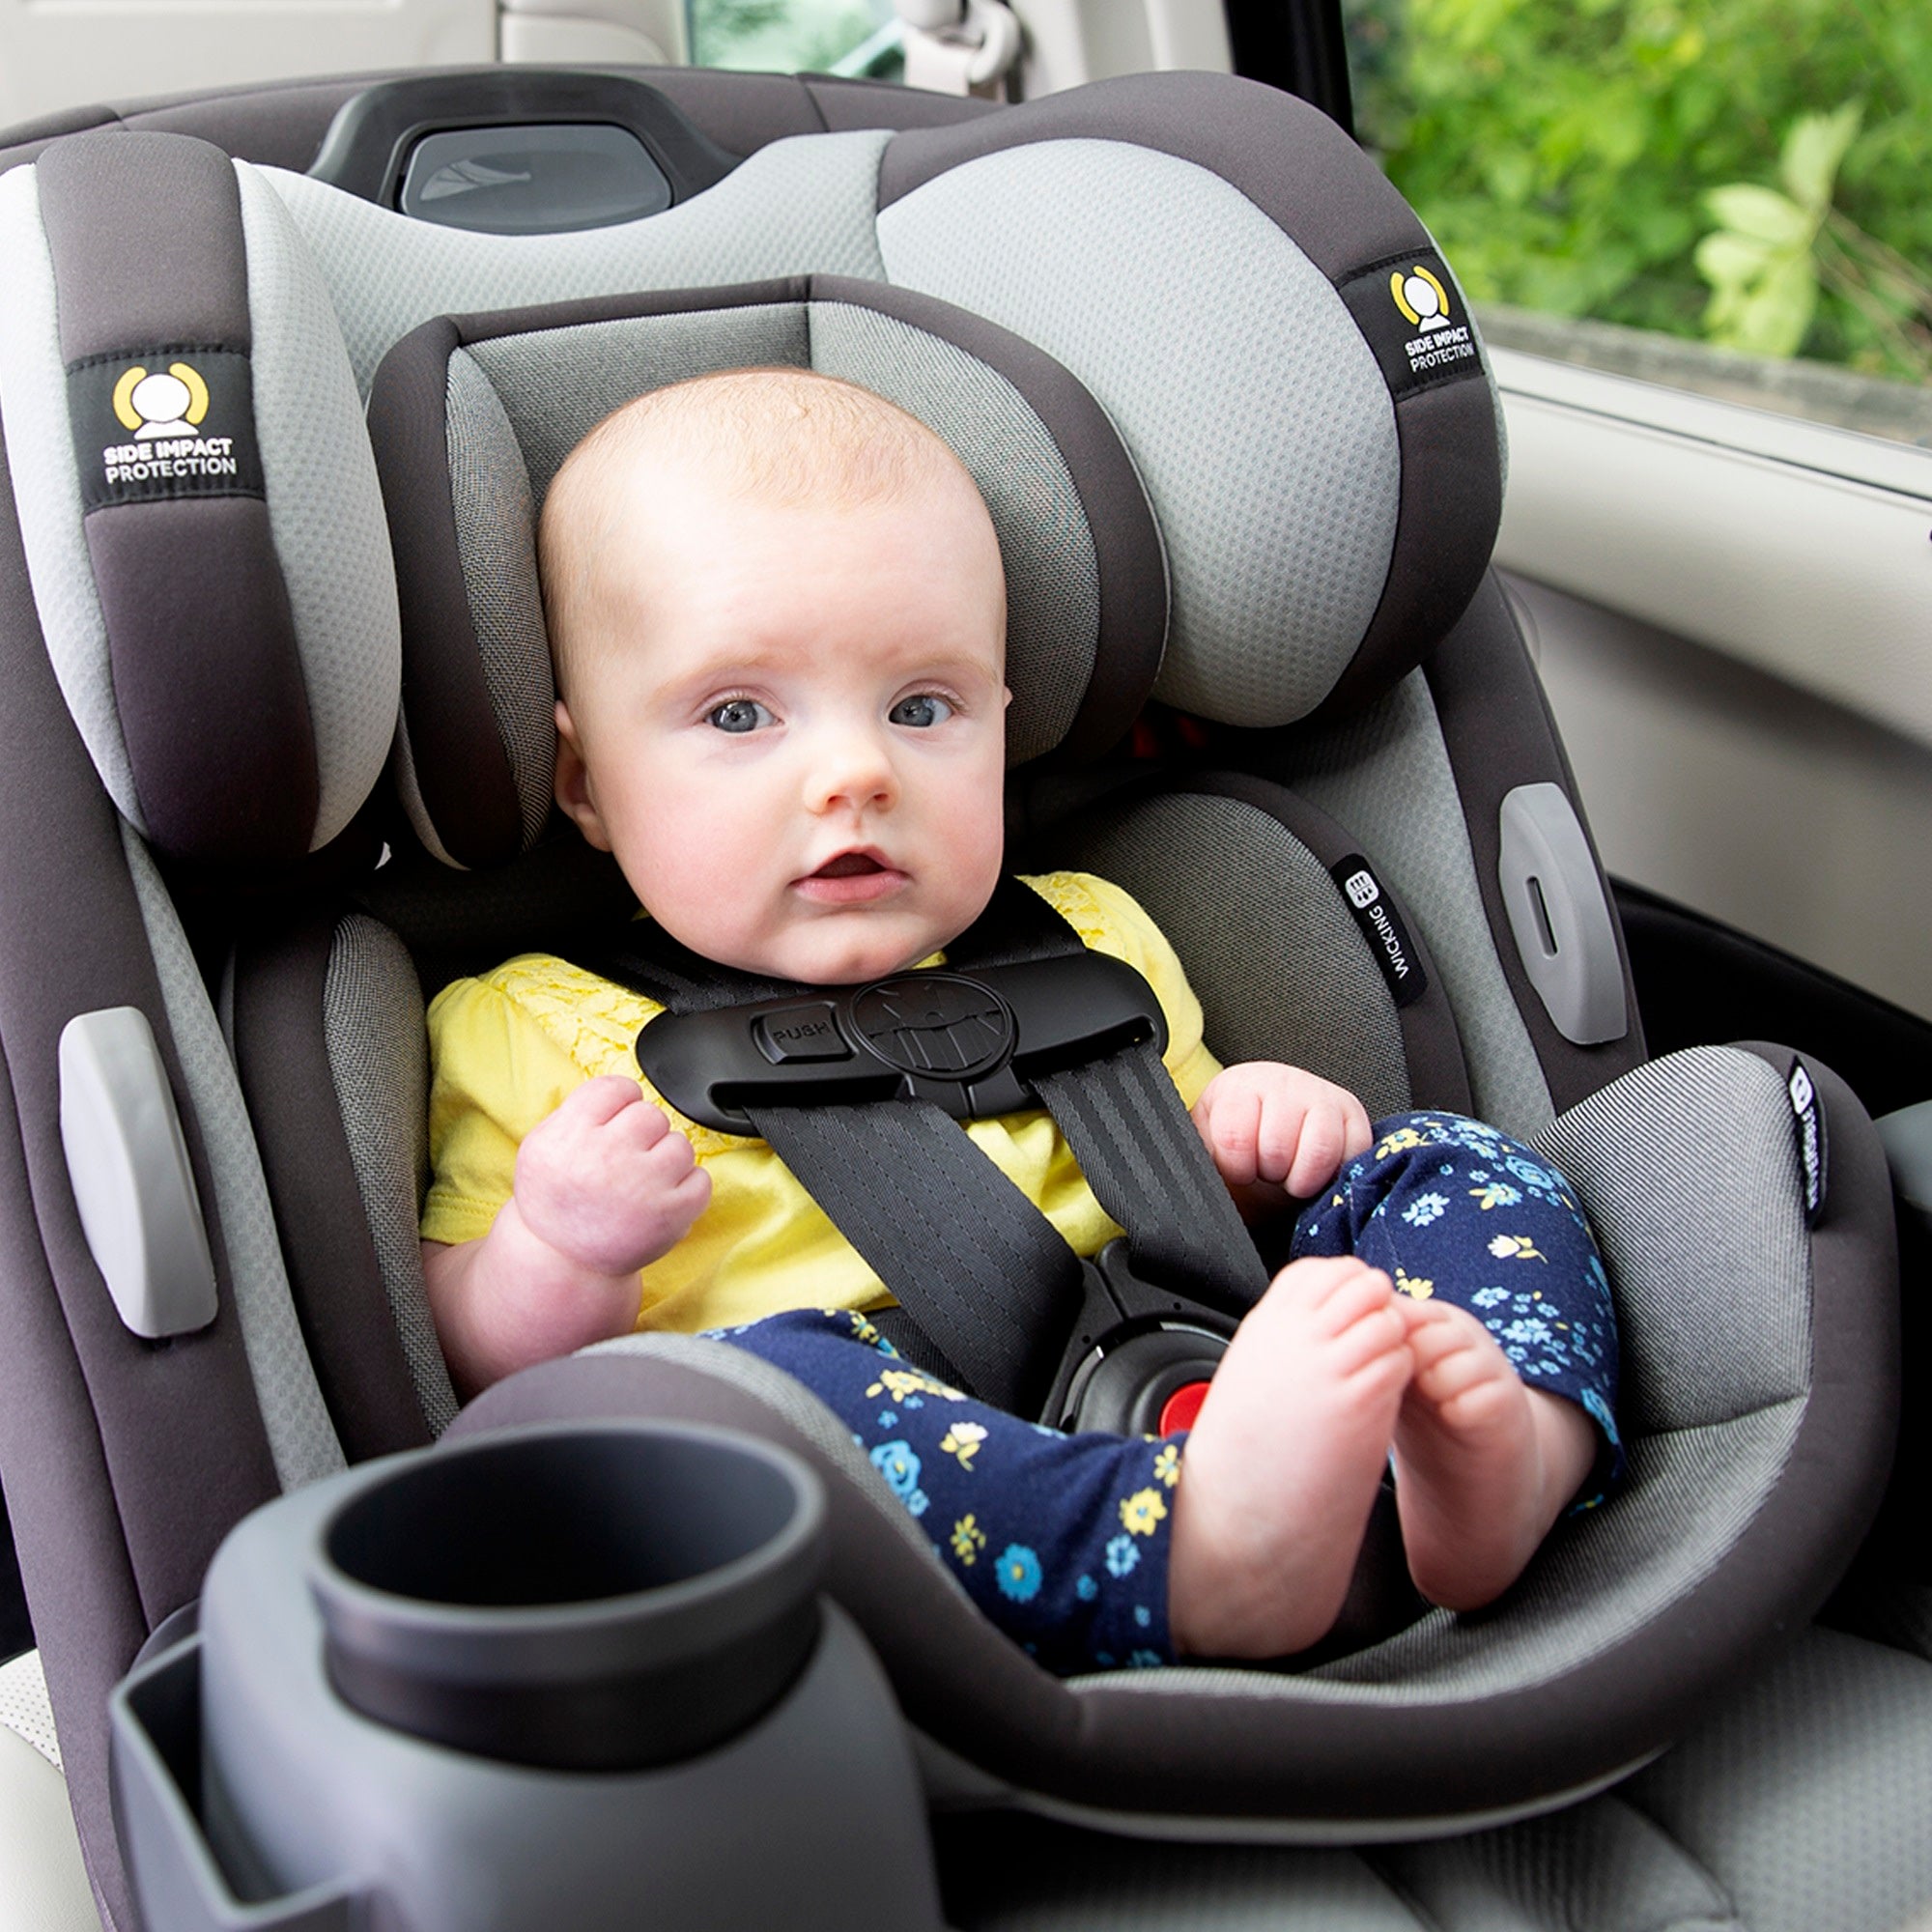 baby wearing yellow shirt in car seat